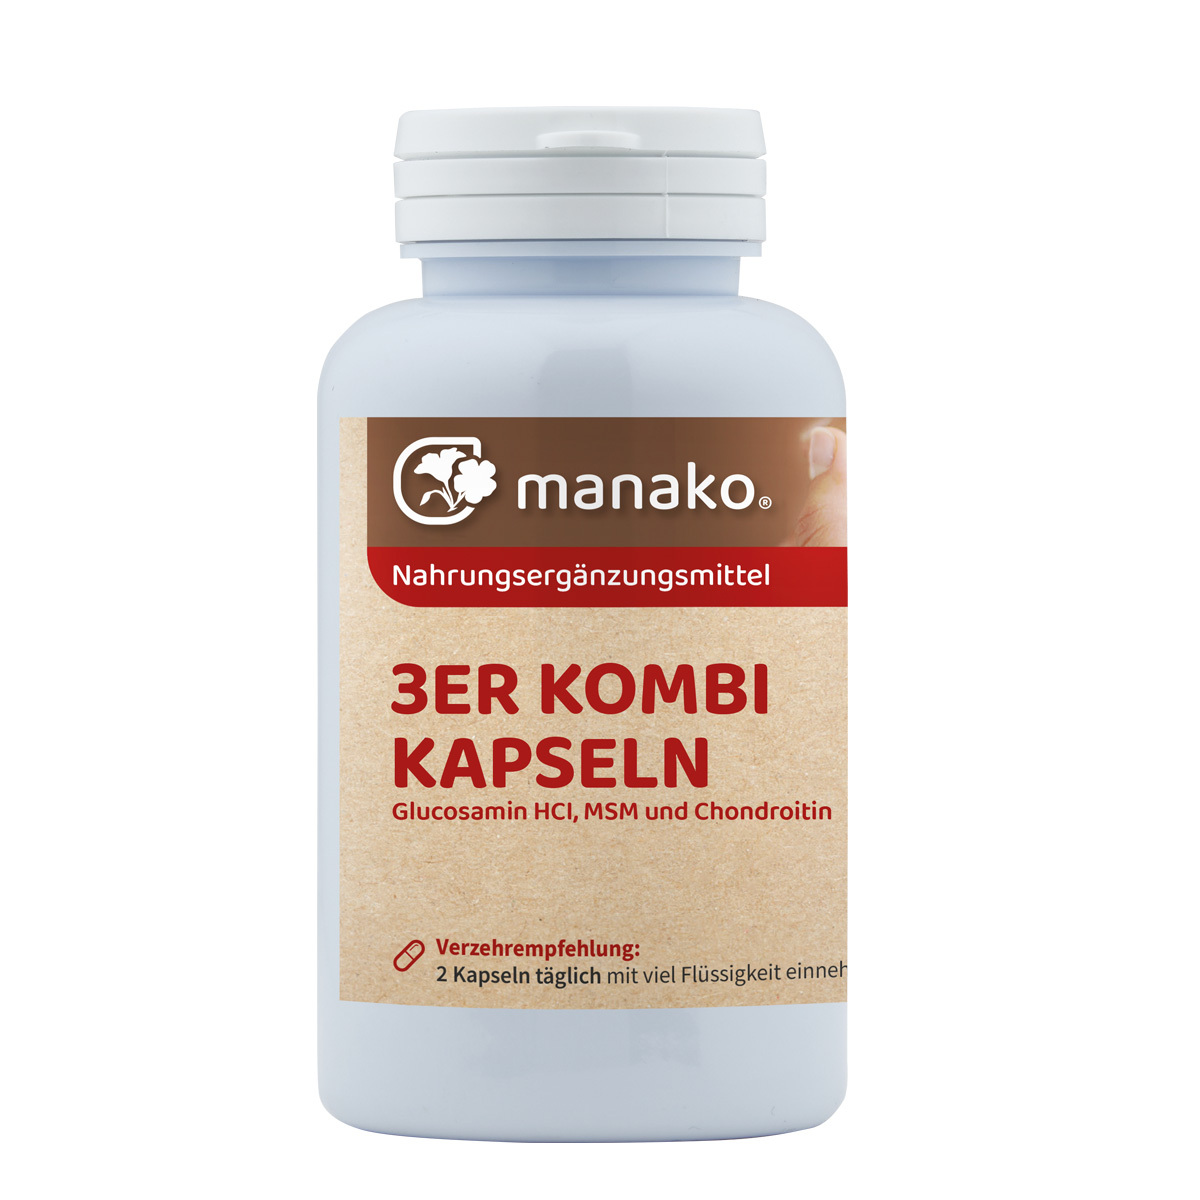 manako 3er KOMBI Kapseln Glucosamin MSM Chondroitin, 120 Stück, 79,8 g